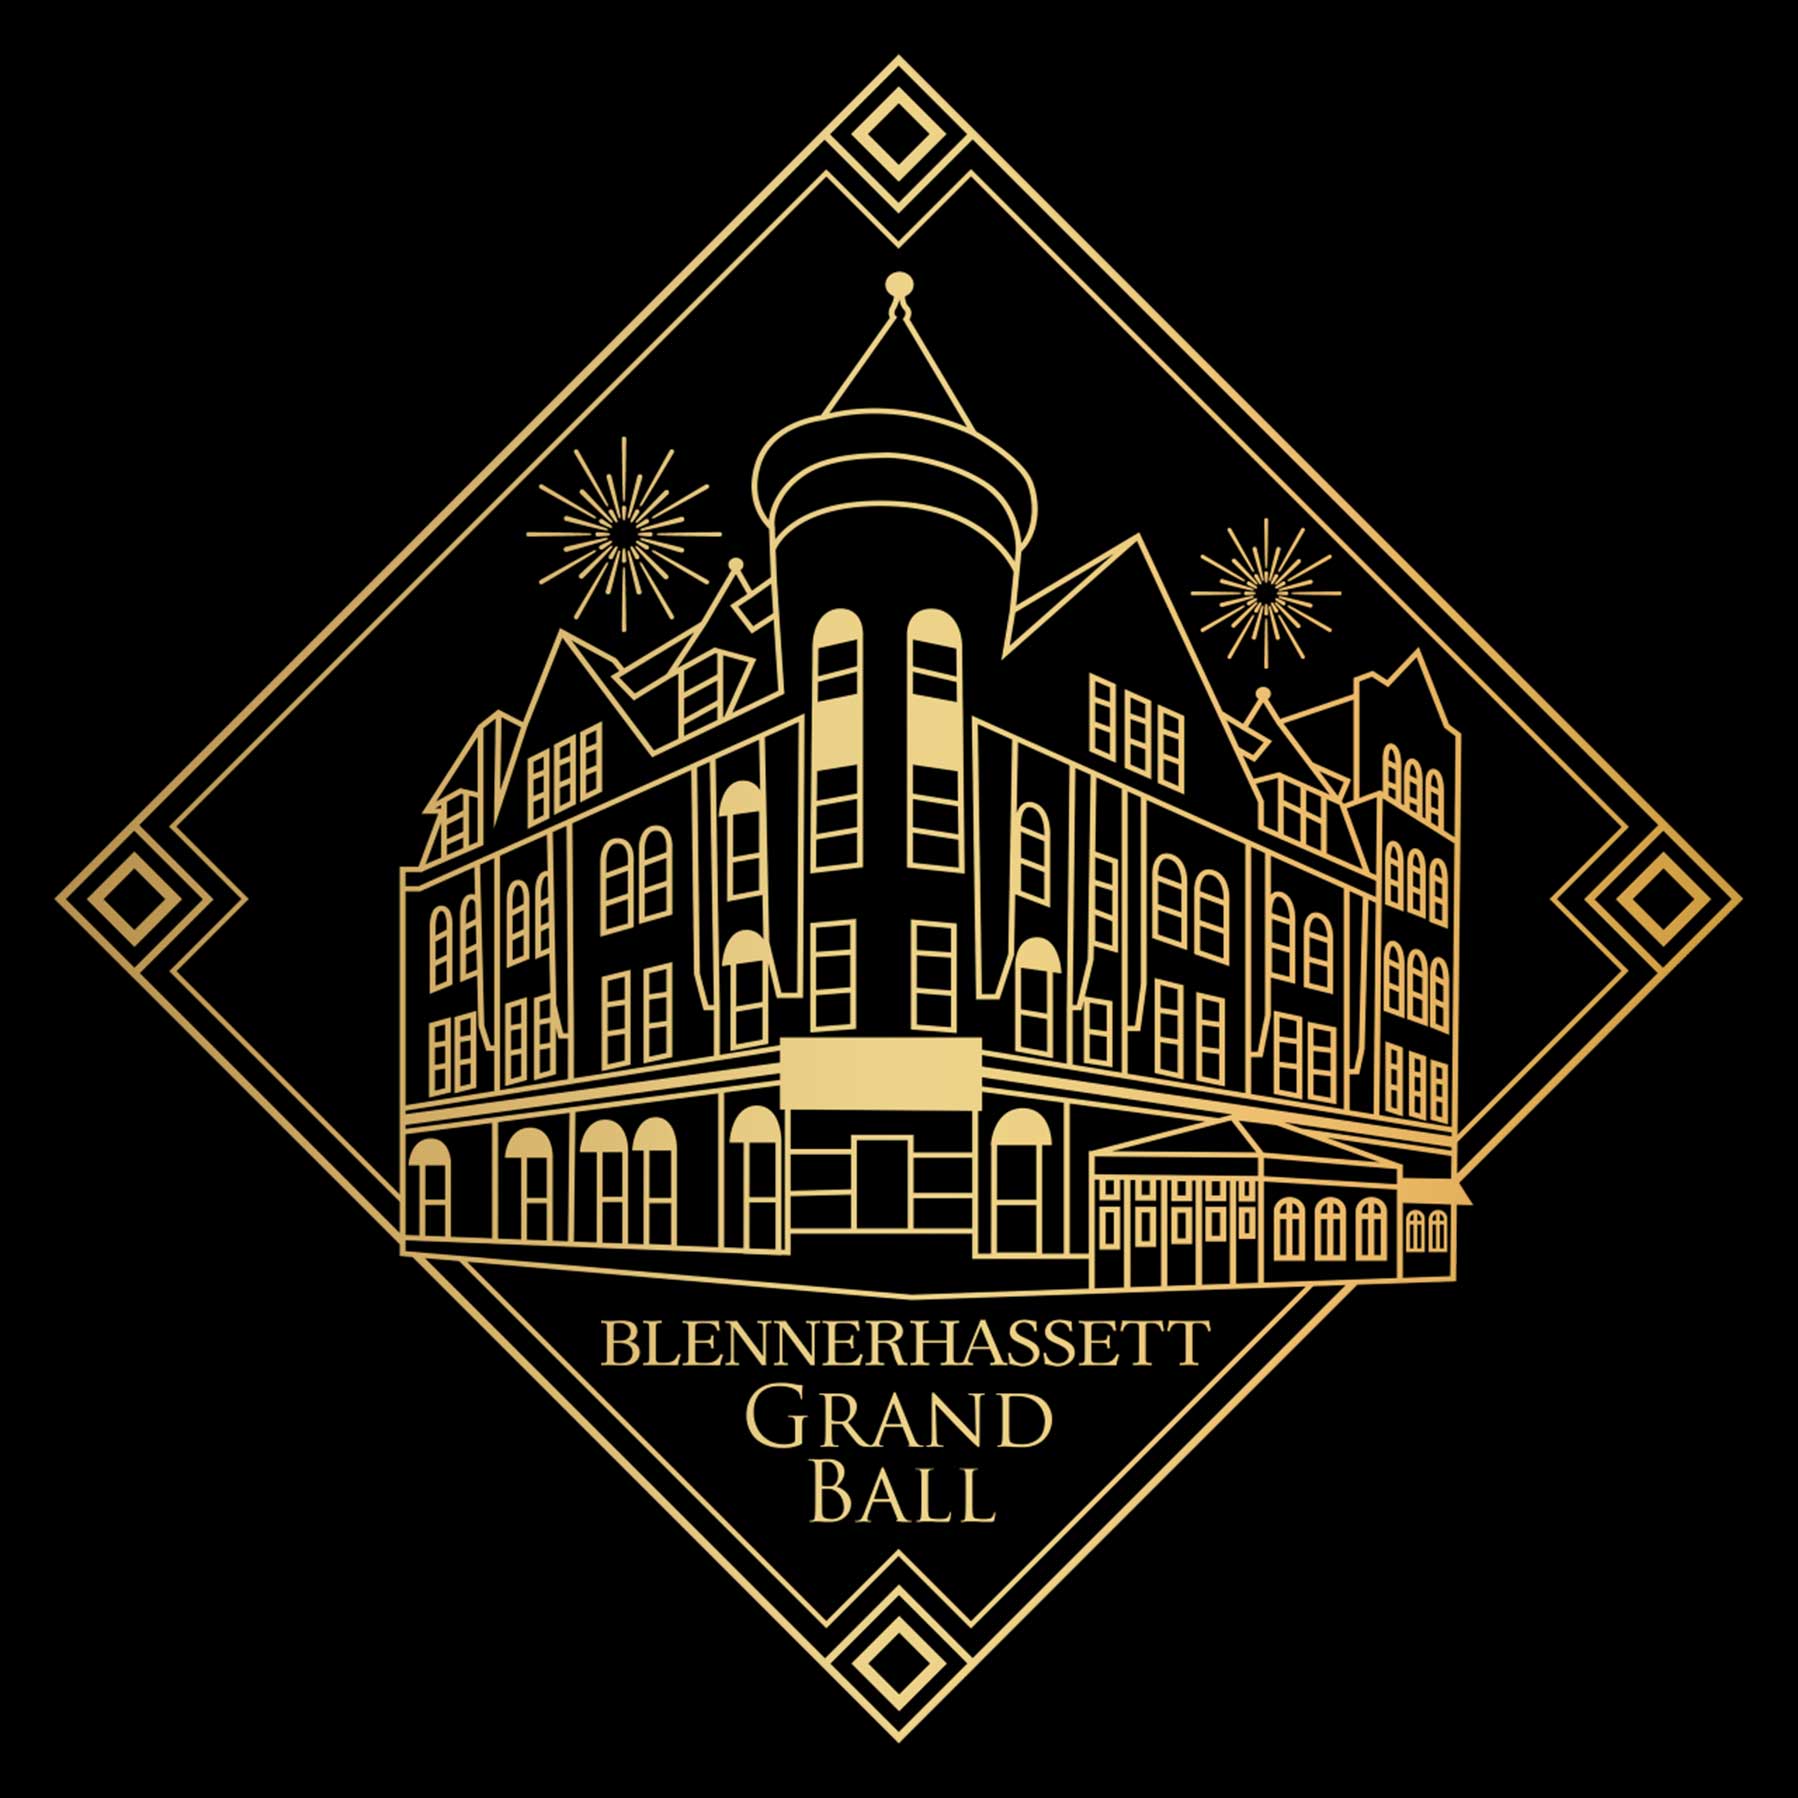 The Blennerhassett Hotel and Spa Grand Ball